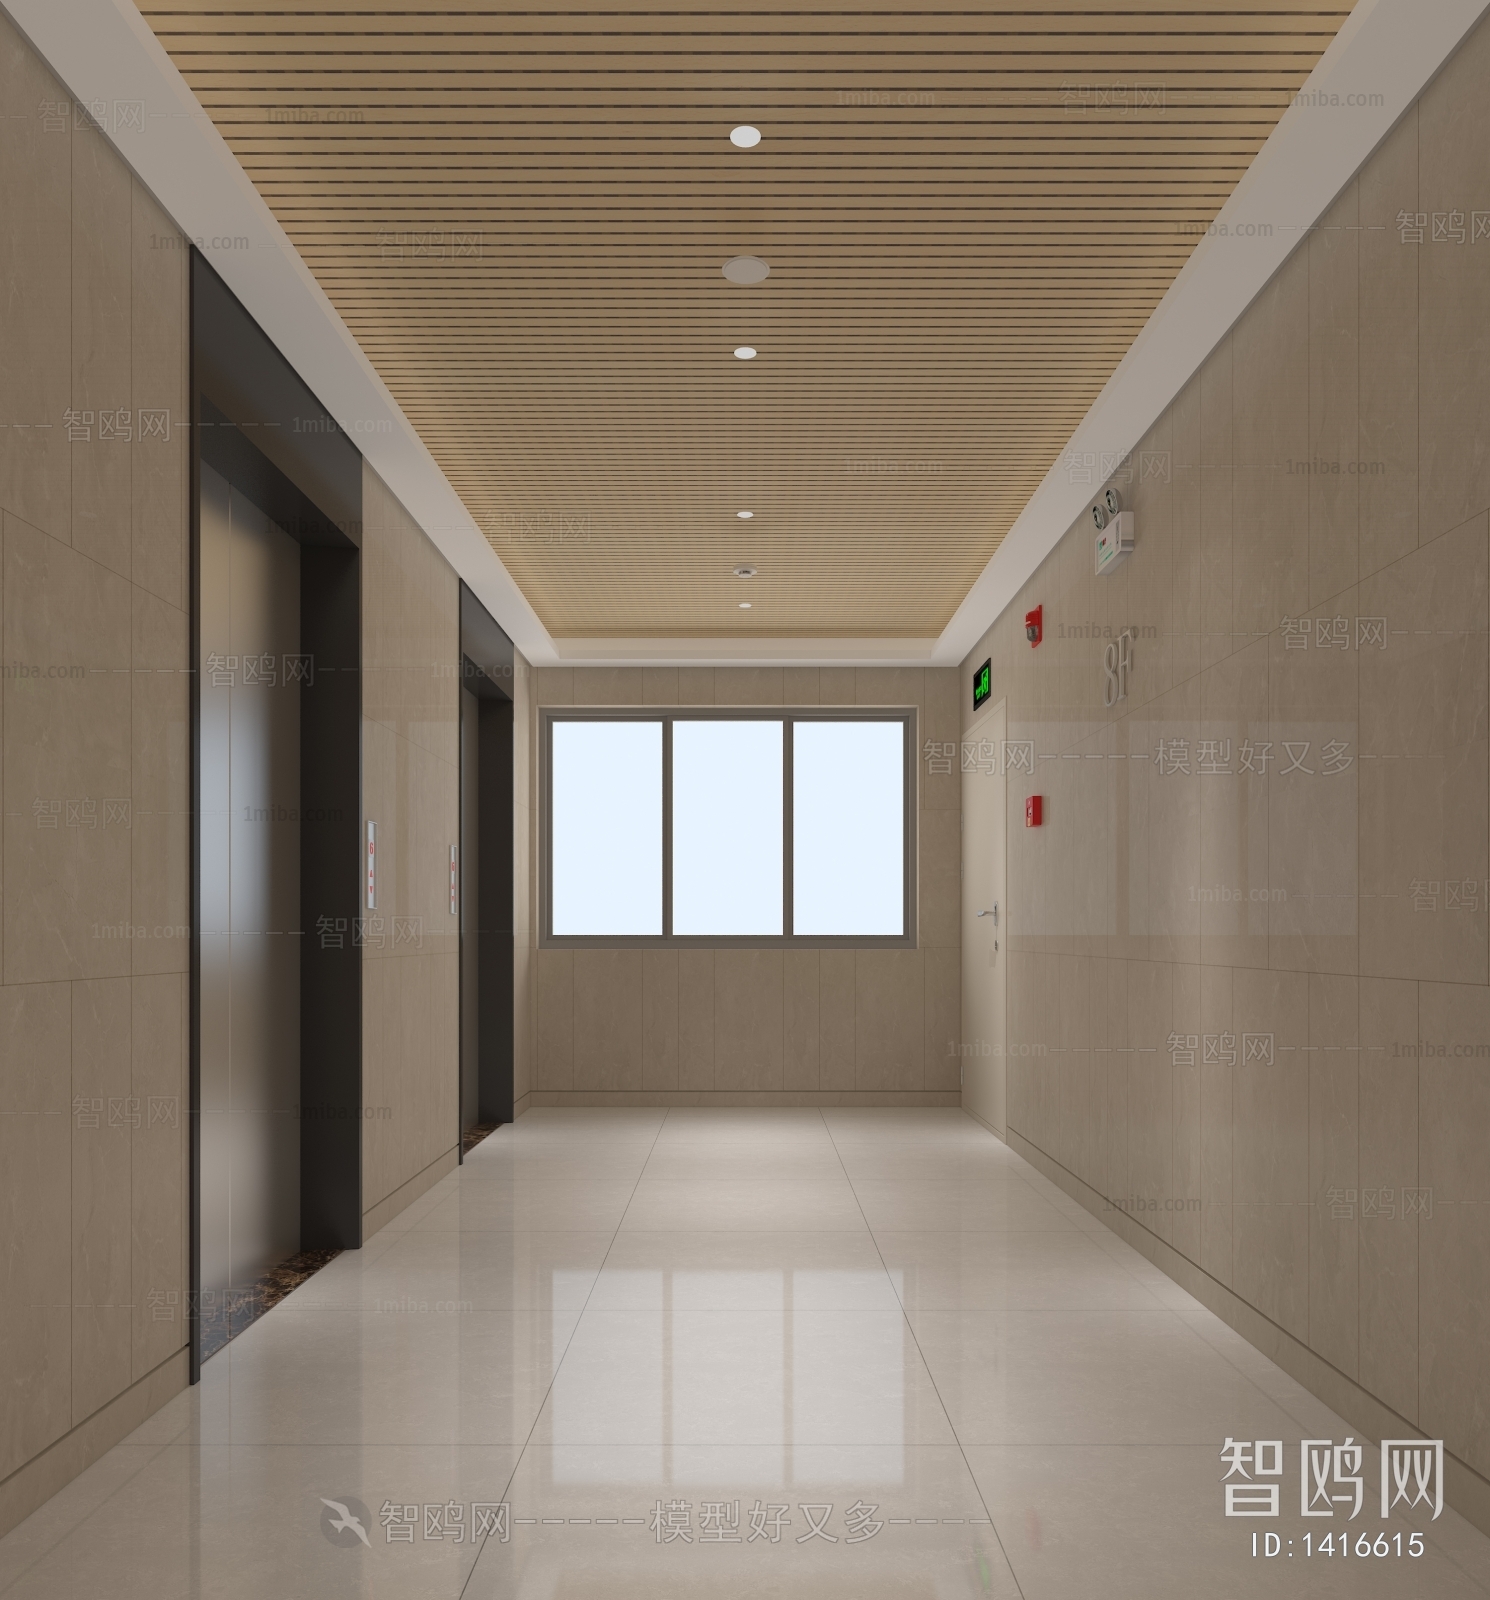 Modern Elevator Hall